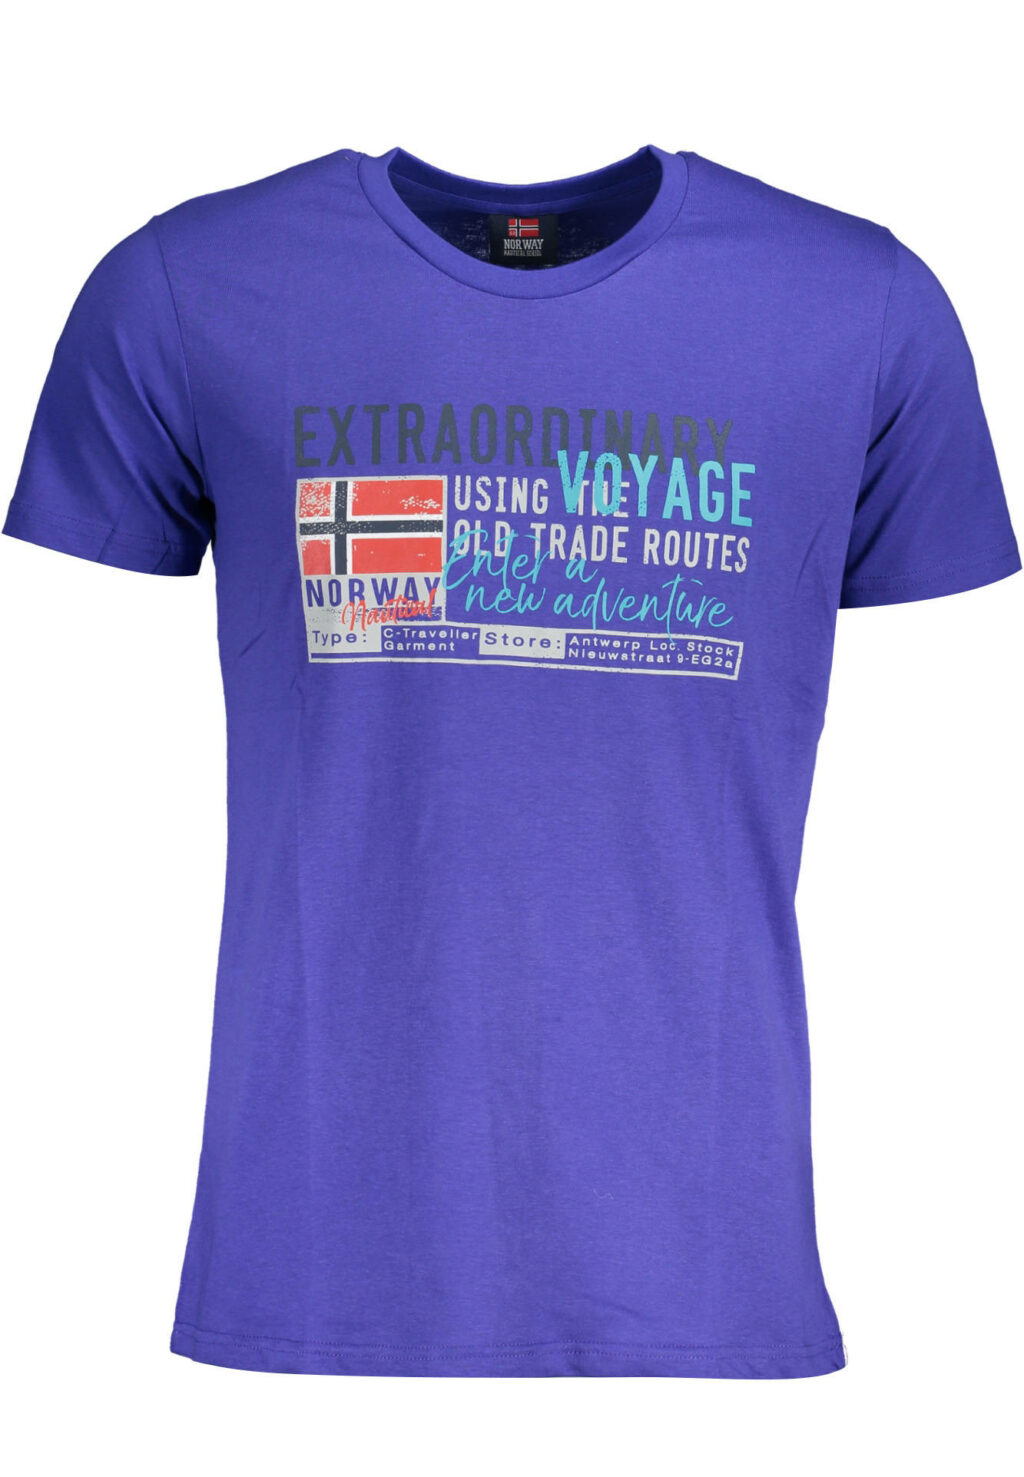 NORWAY 1963 MEN'S BLUE SHORT SLEEVED T-SHIRT 836015_BLU_ROYAL